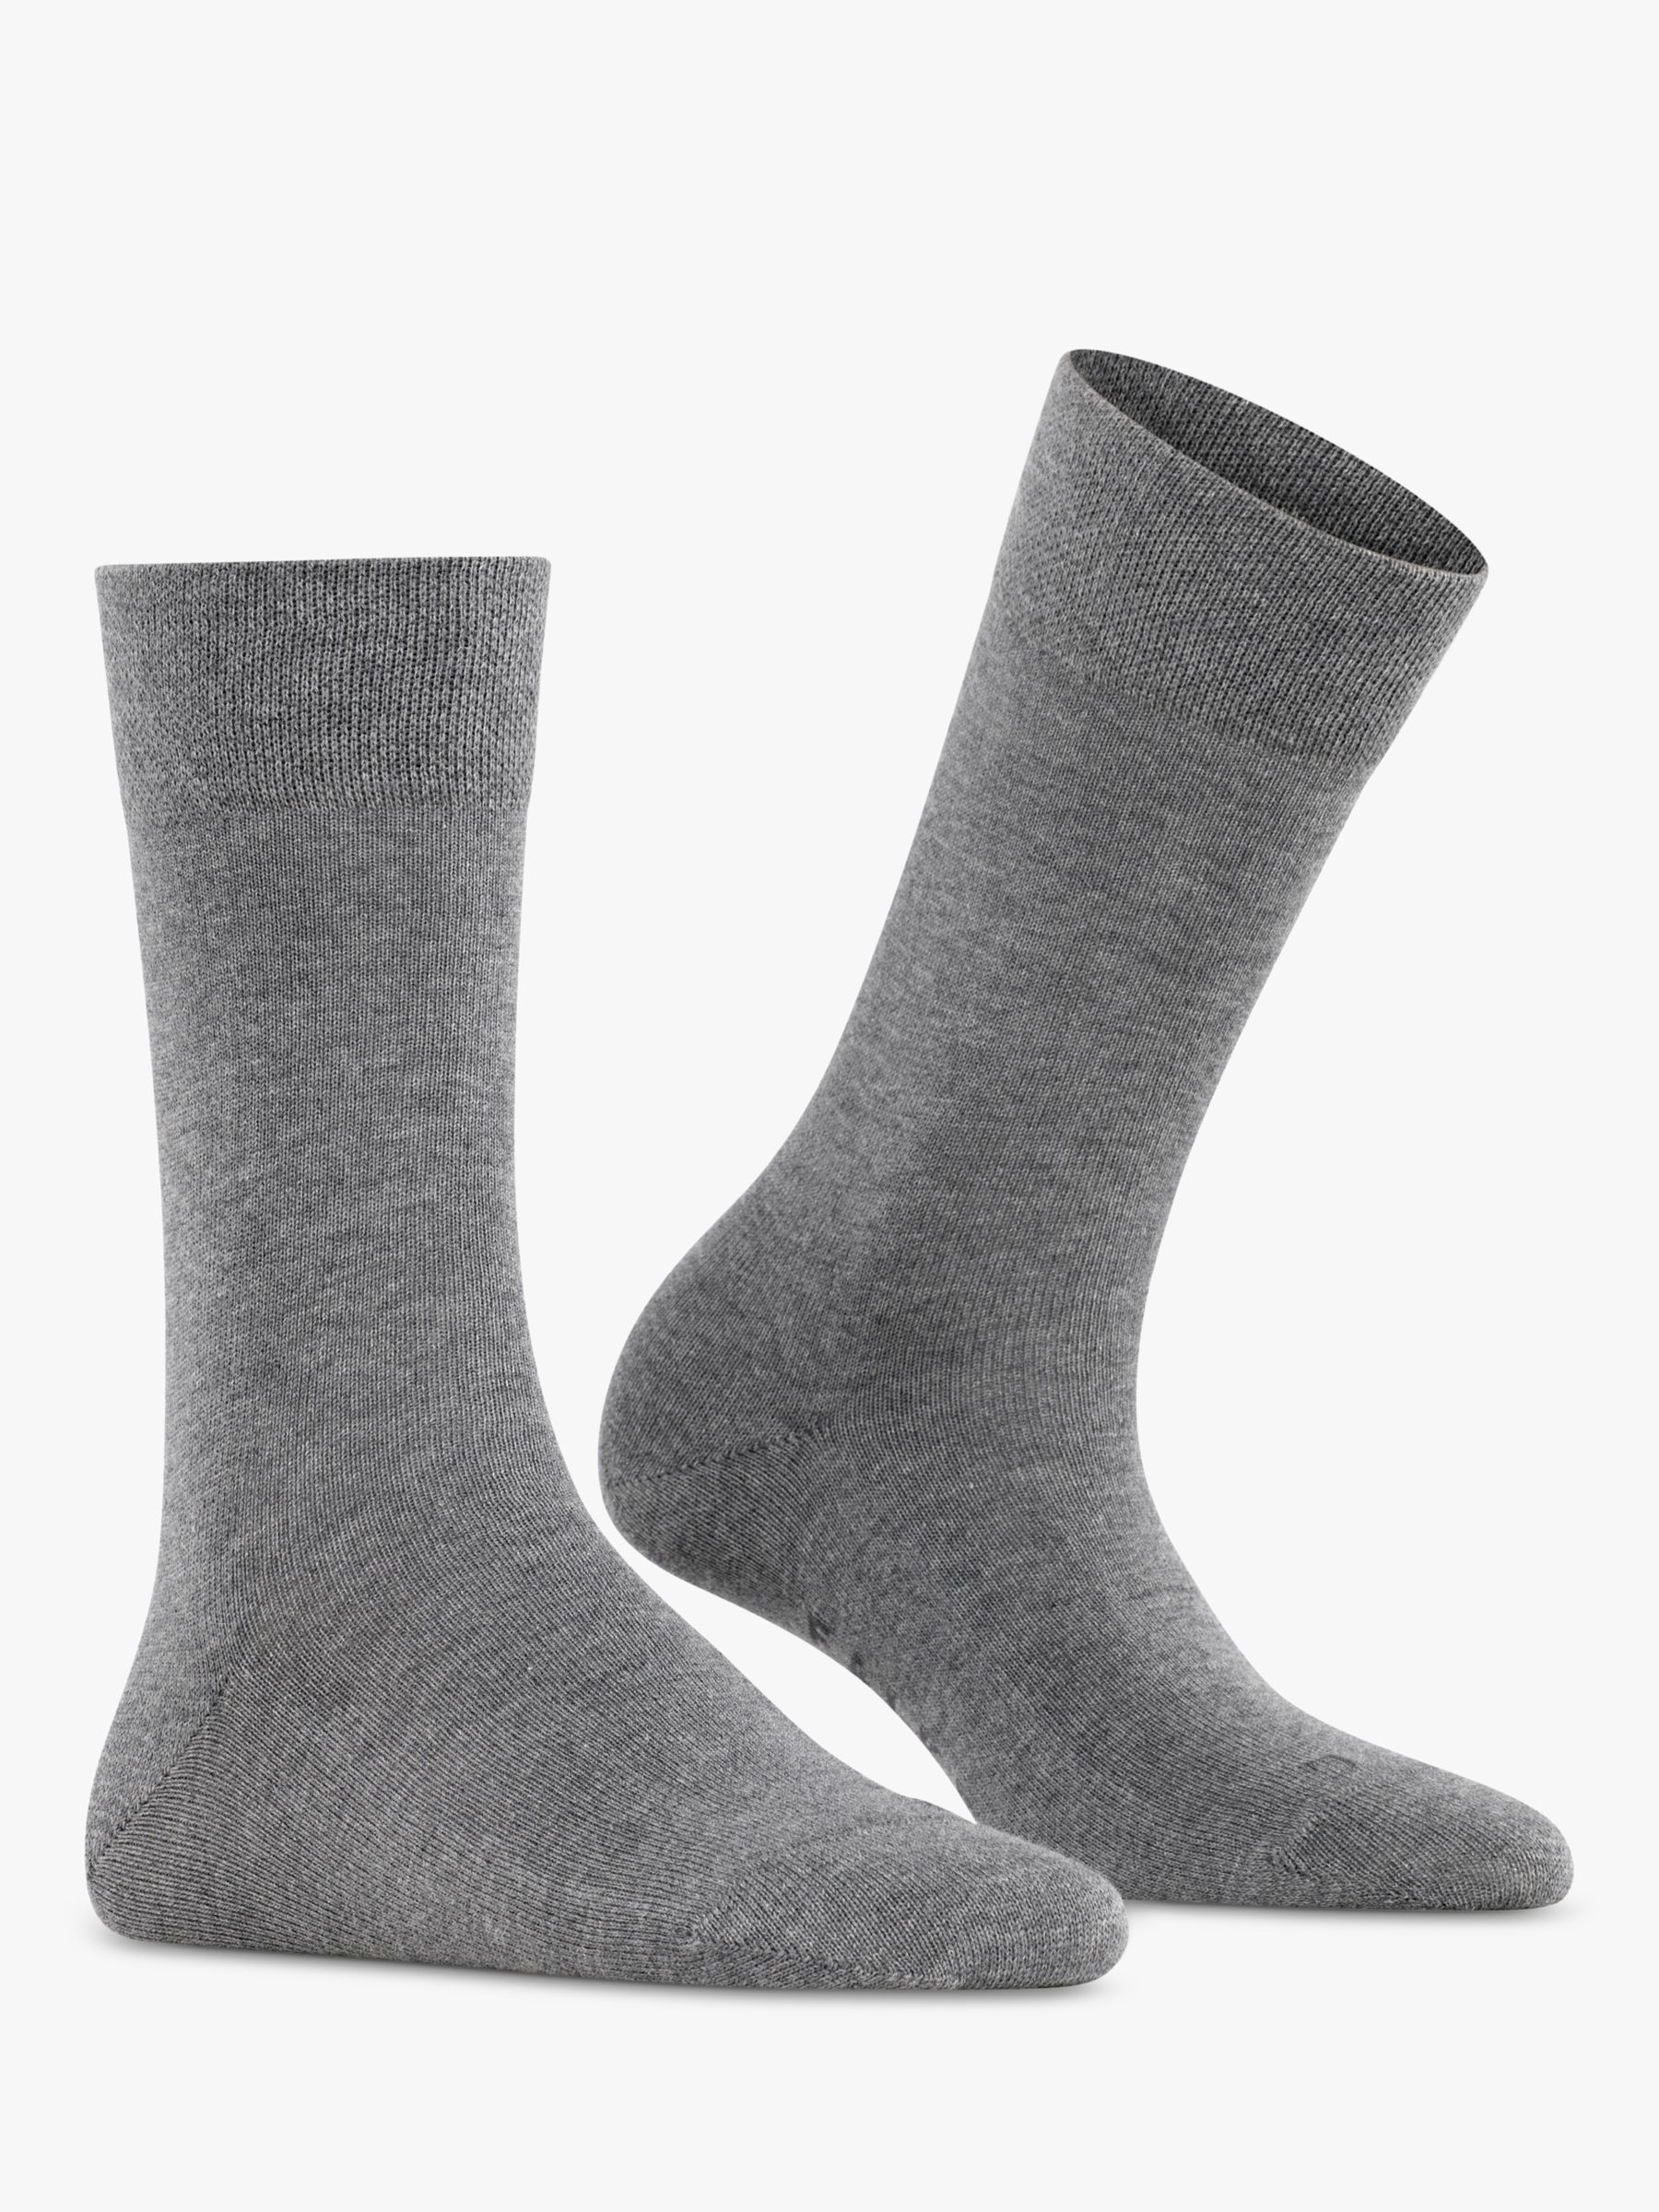 Buy FALKE Sensitive London Cotton Rich Ankle Socks Online at johnlewis.com